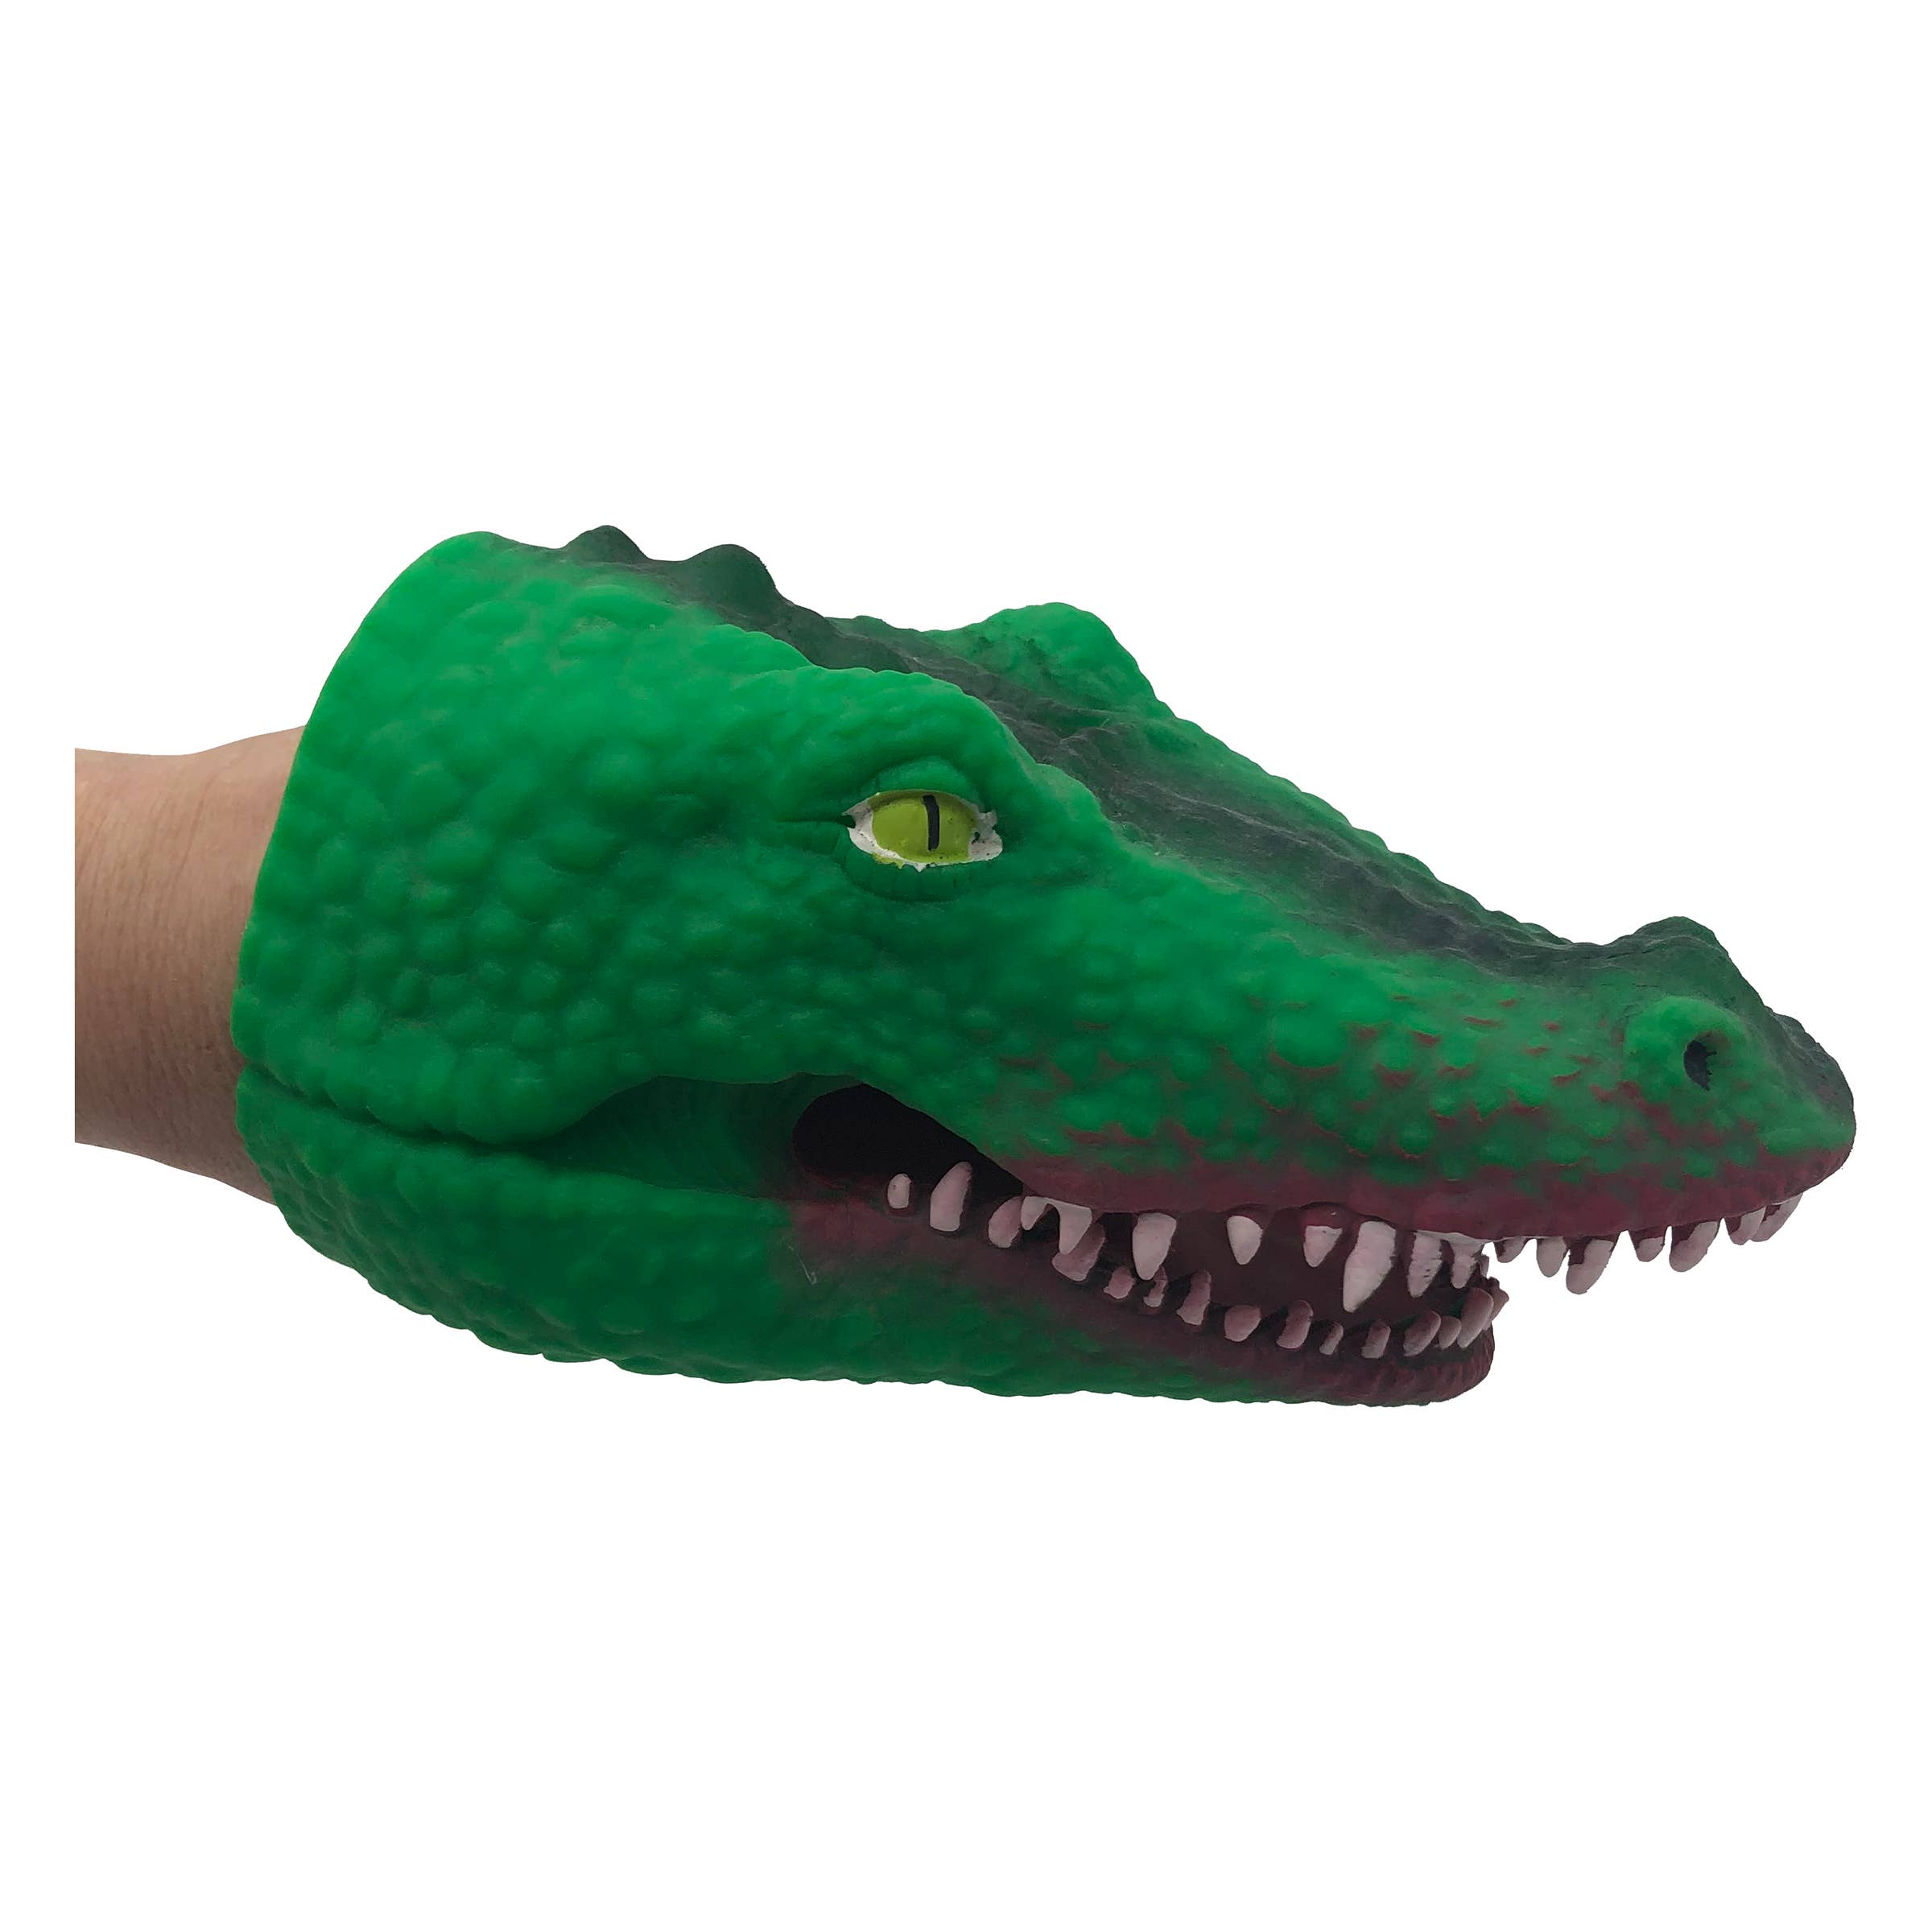 Soft vinyl TPR crocodile hand puppet animal head hand puppets kids Toys gift Fad 